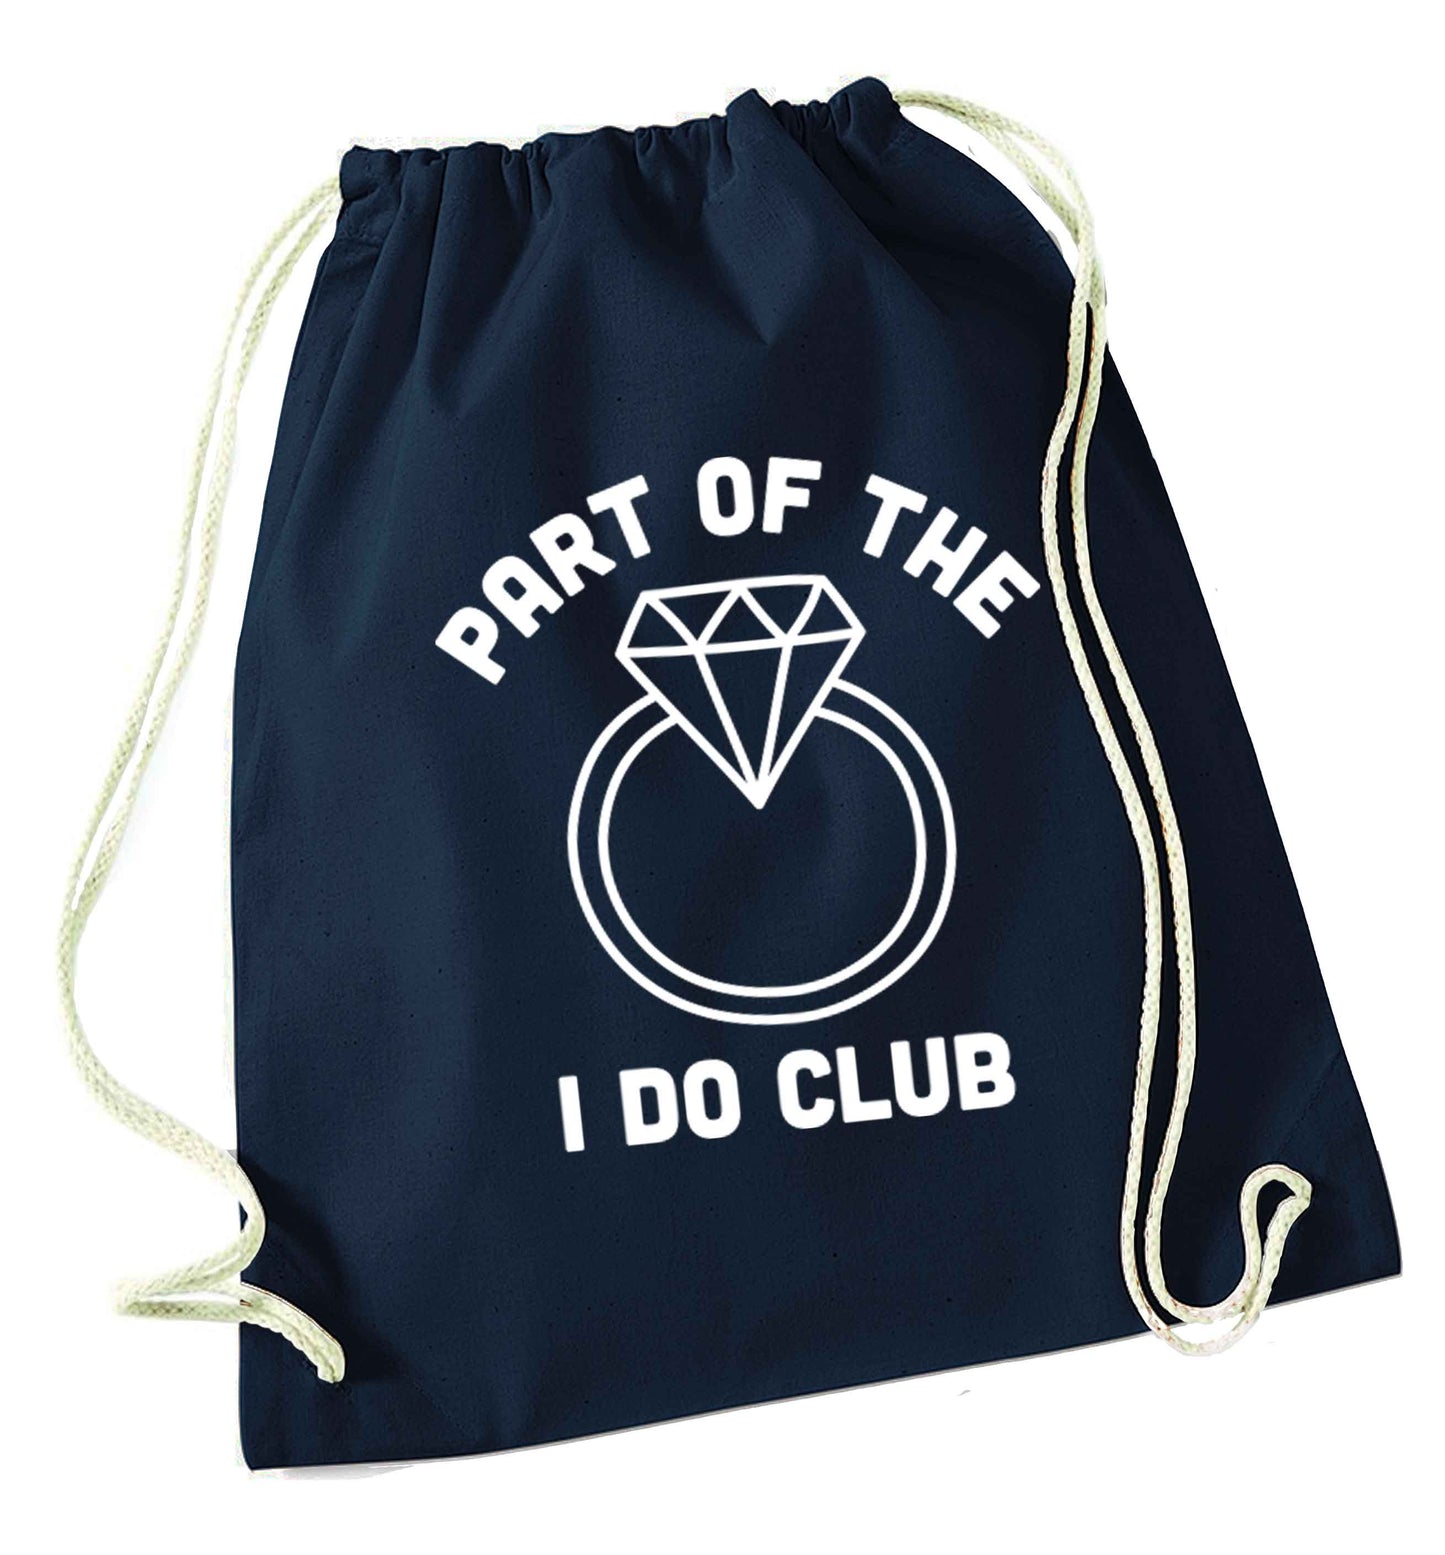 Part of the I do club navy drawstring bag